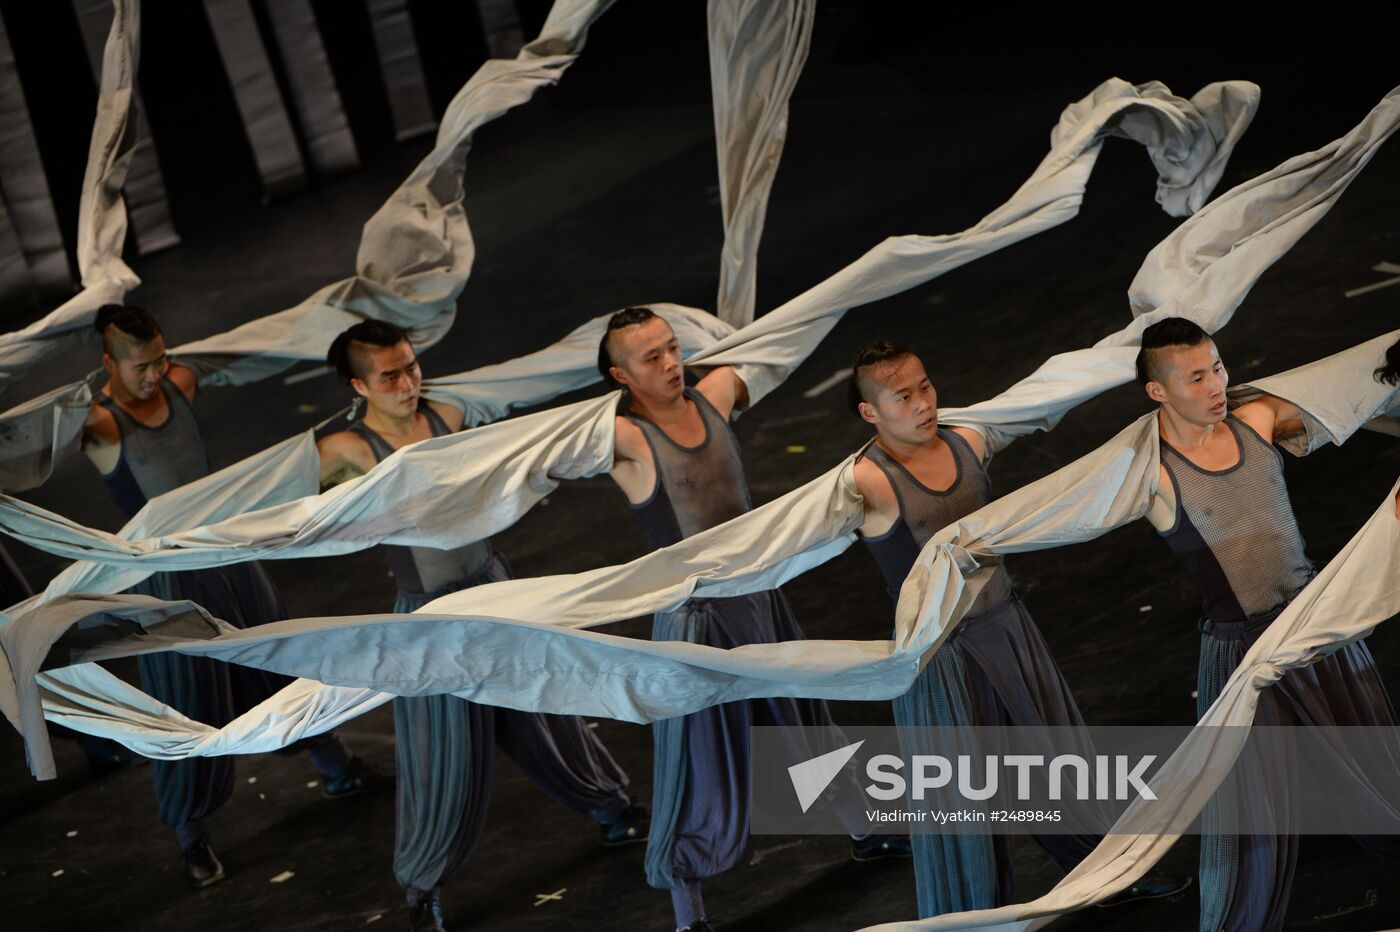 Contemporary Dragon Kungfu Company premieres The Shaolin Gates show